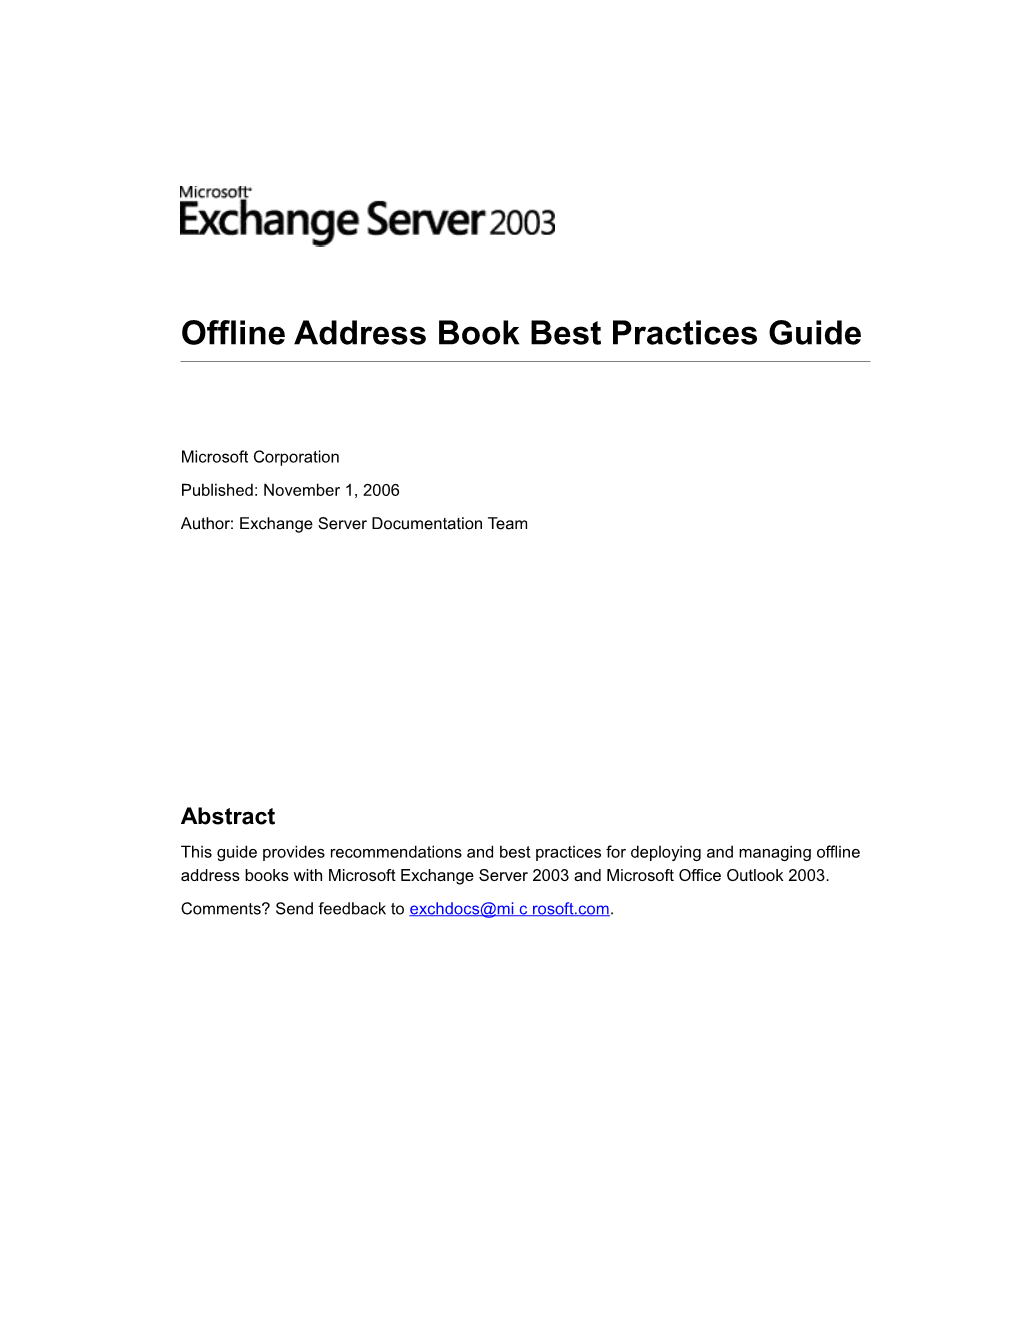 Offline Address Book Best Practices Guide